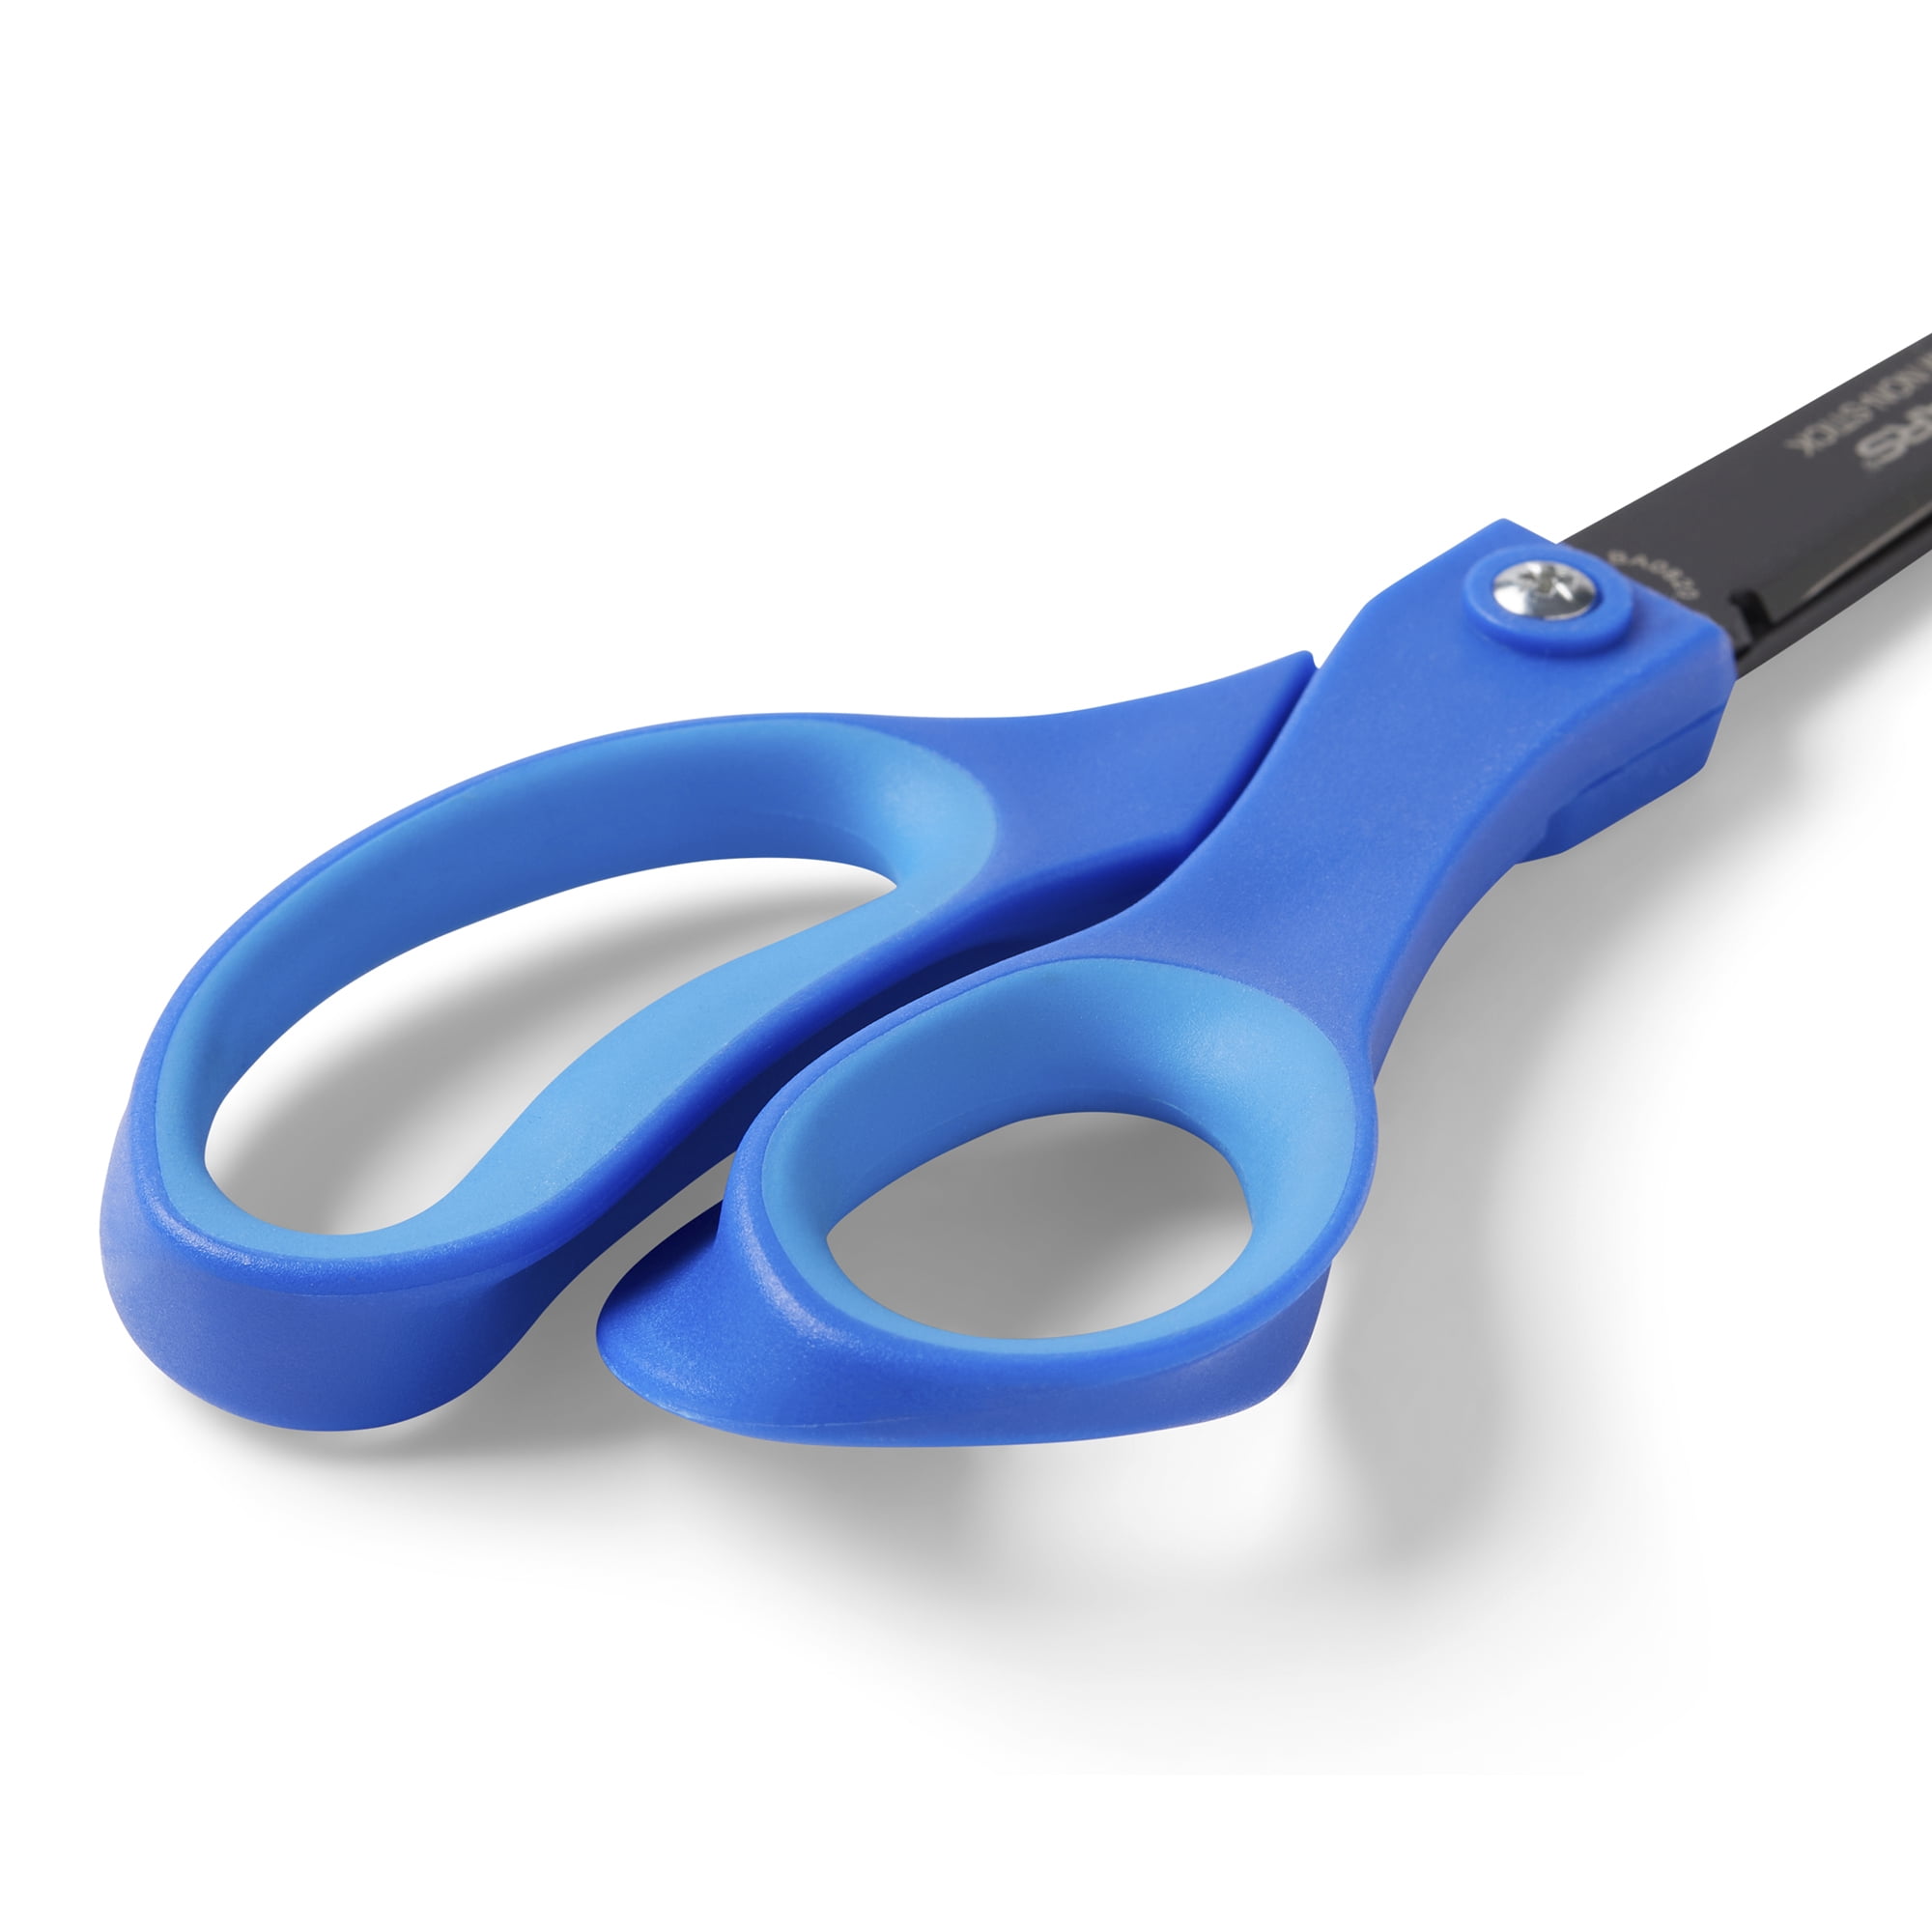 Fiskars Specialty Scissors with Magnet - FSK1238637097 